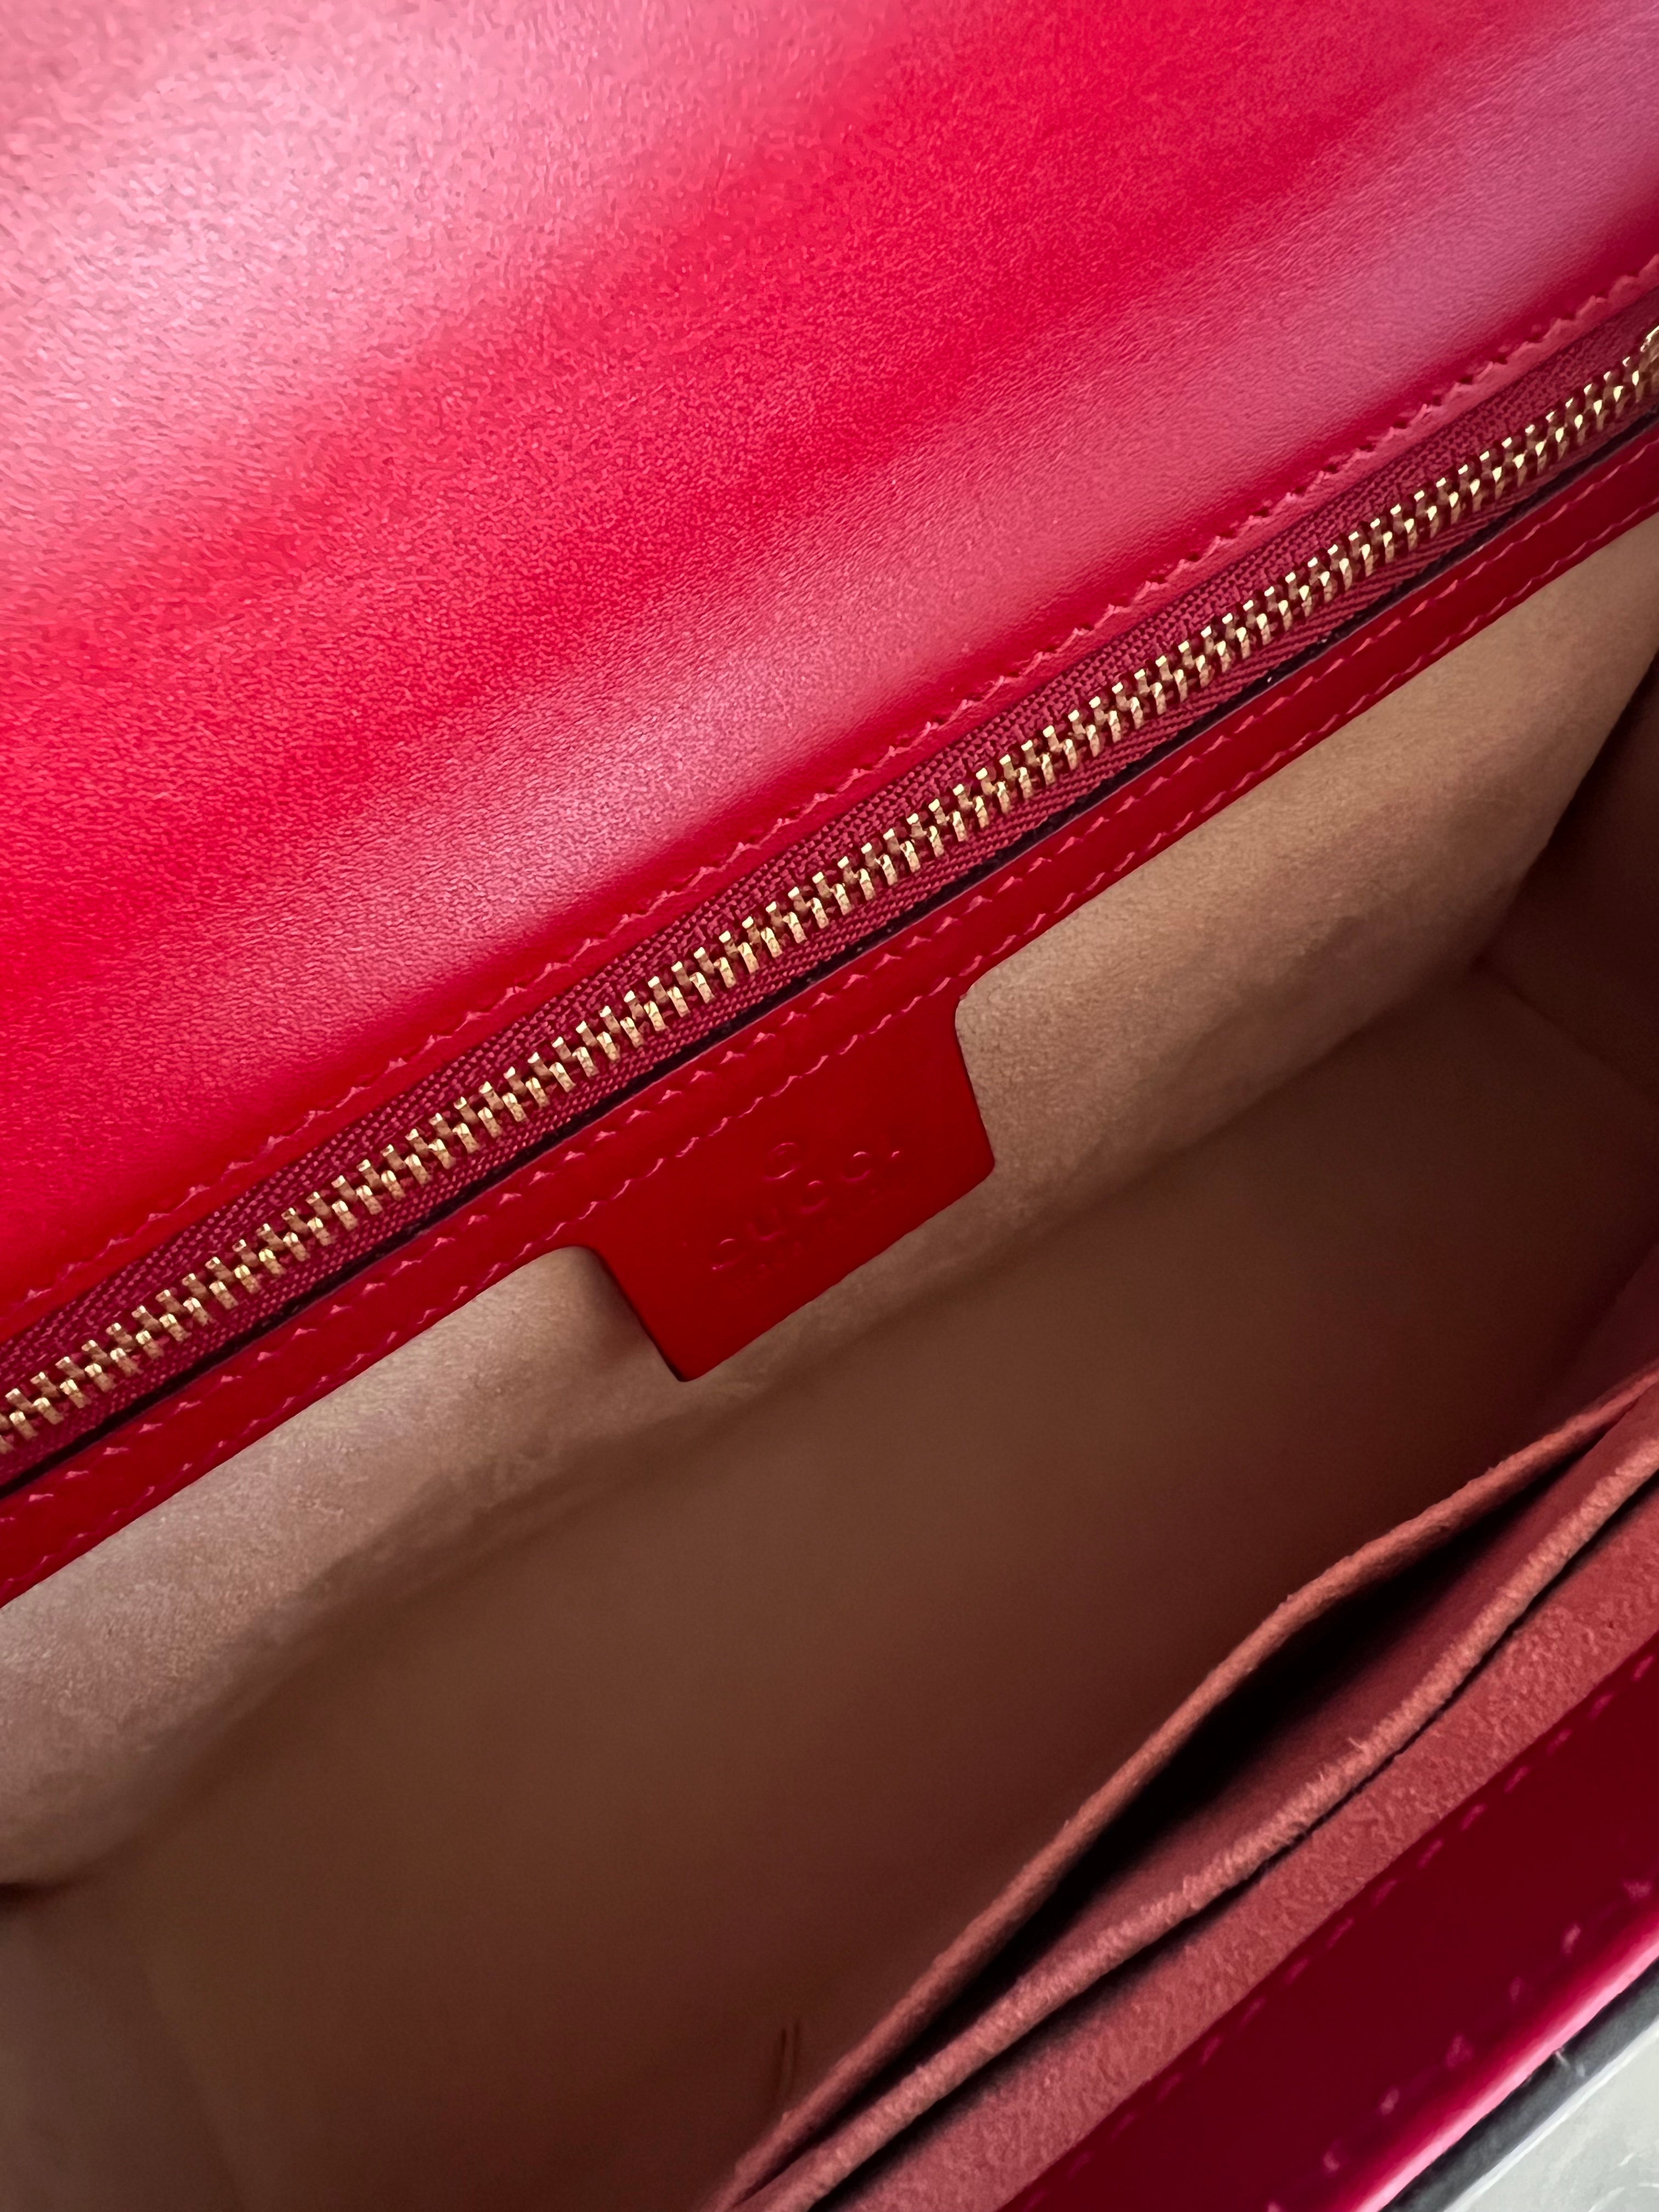 Red Guccissima Leather Medium Padlock Shoulder Bag - Gucci